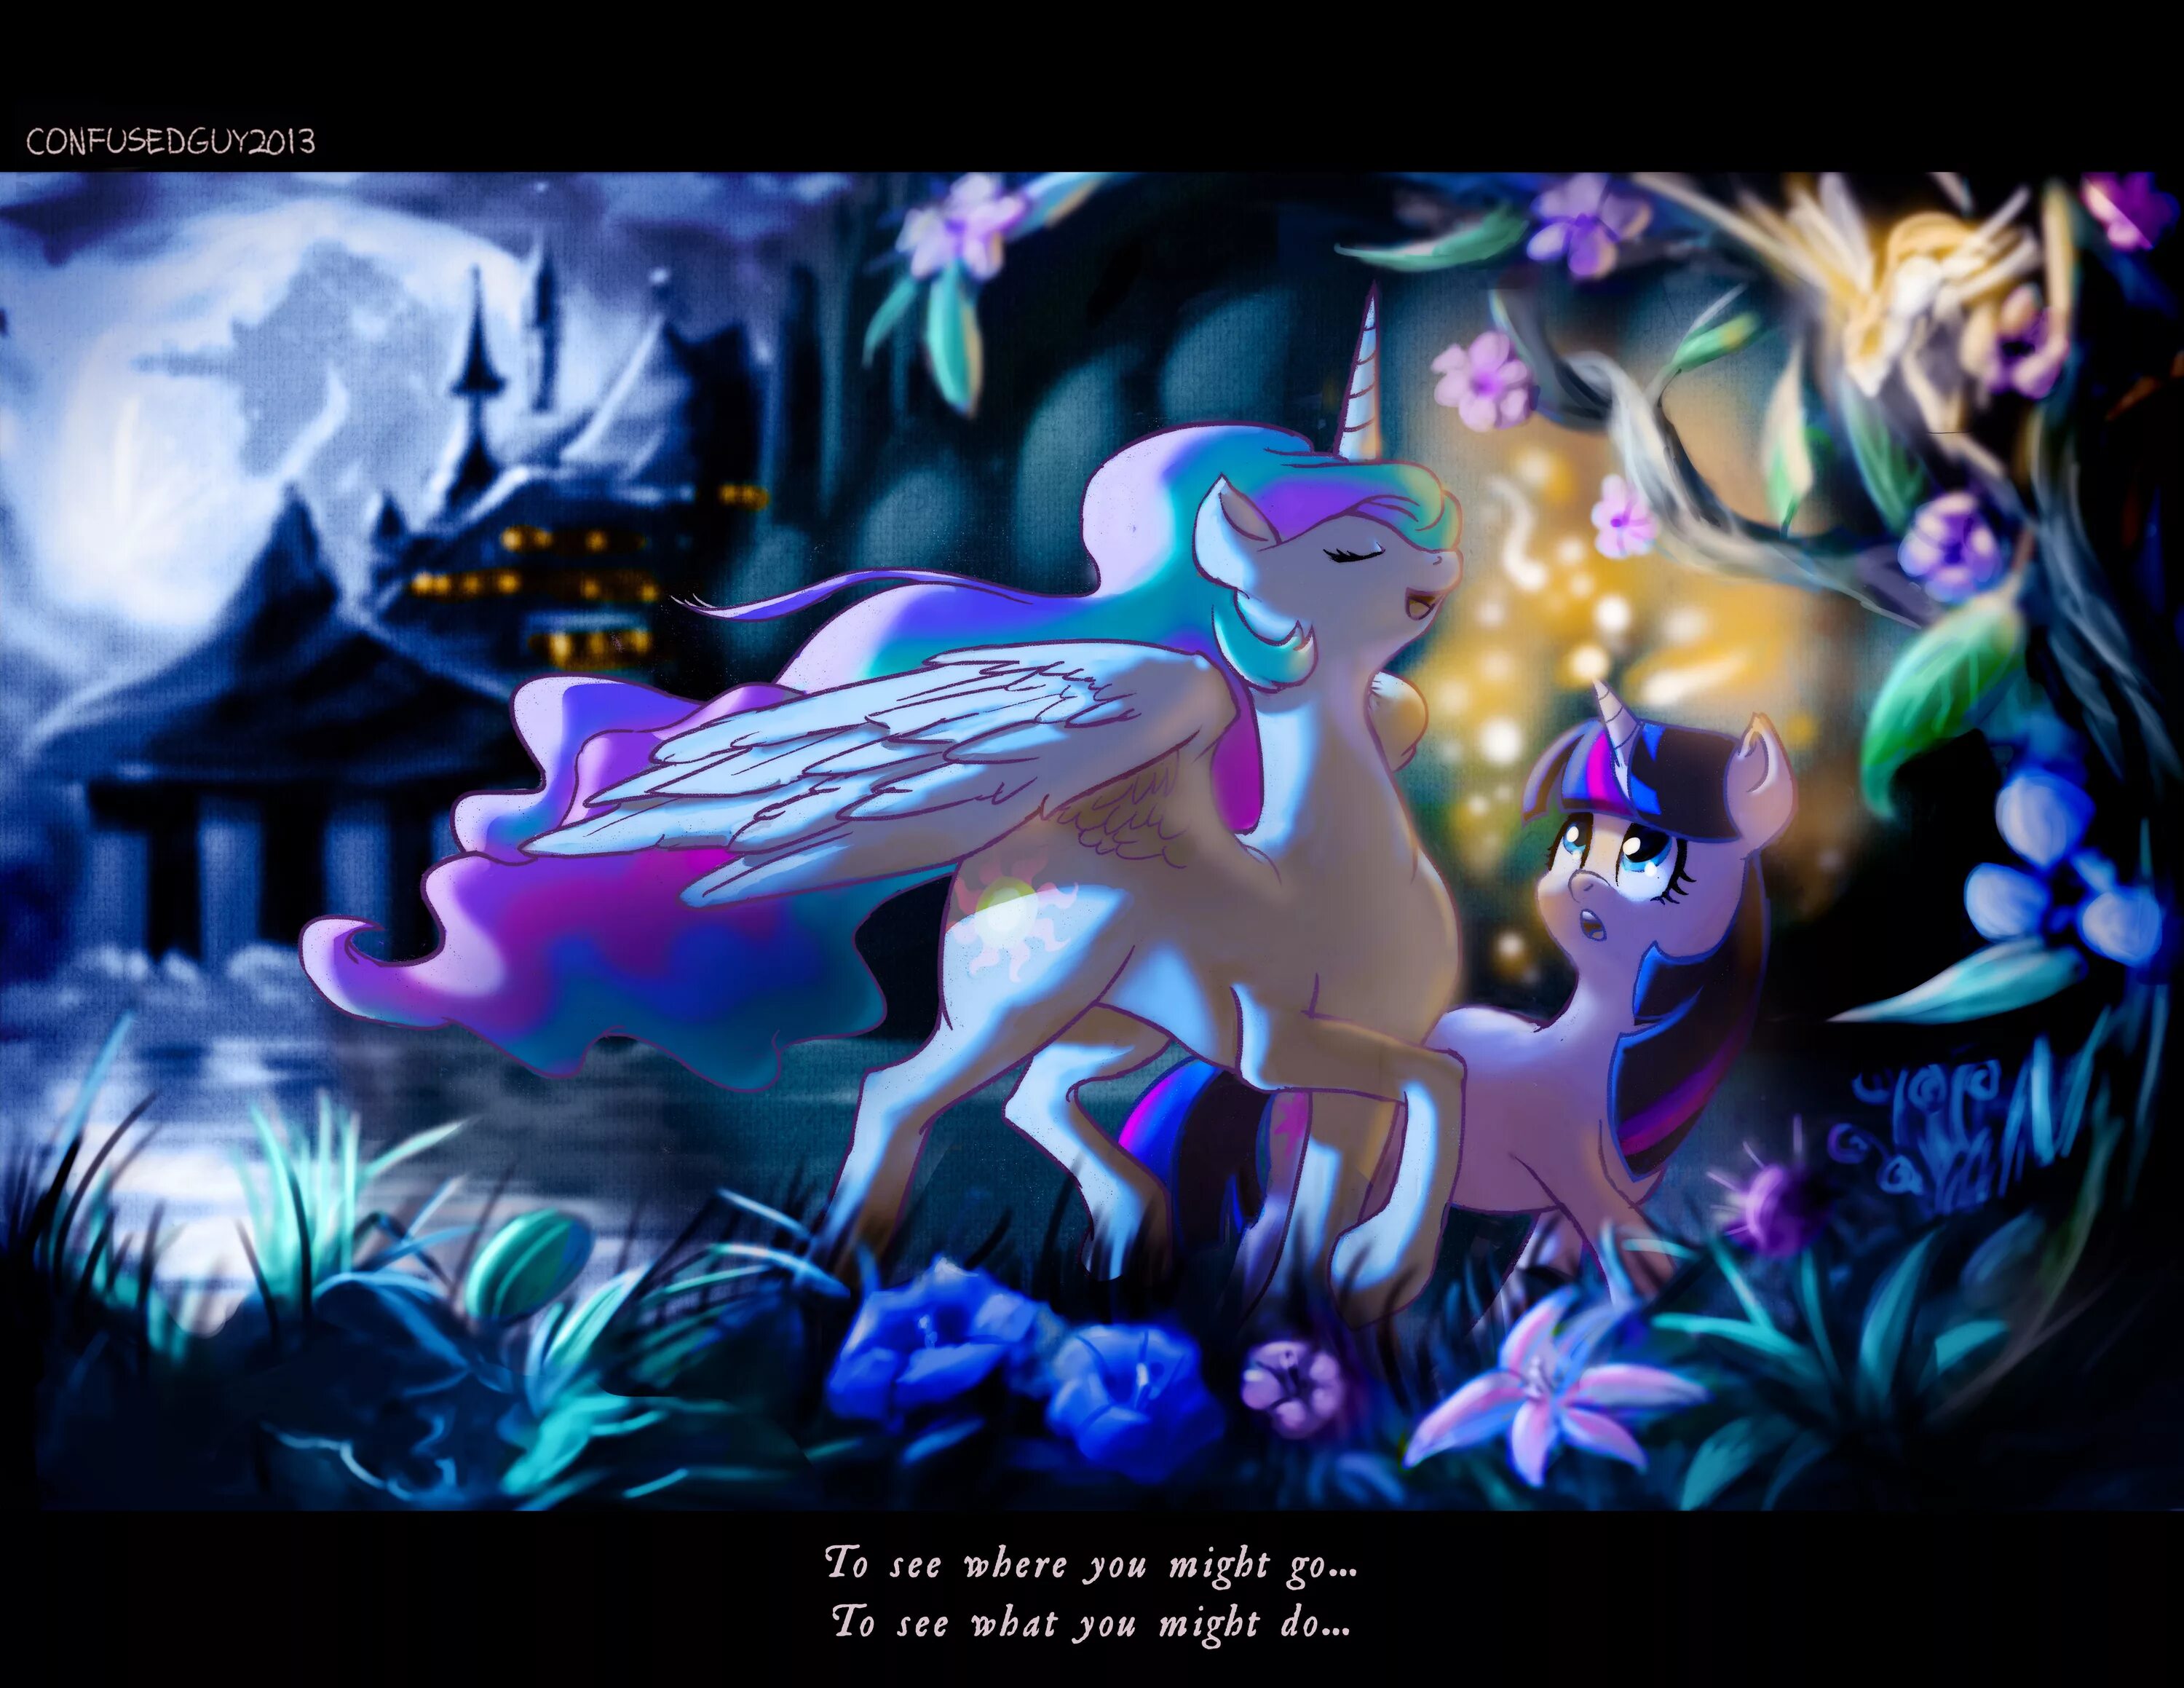 МЛП магия принцесс. My little Pony магия принцесс Кантерлот. МЛП магия принцесс пони. Май Лито пони магич принцесс. Май литл пони магия принцесс игра мод